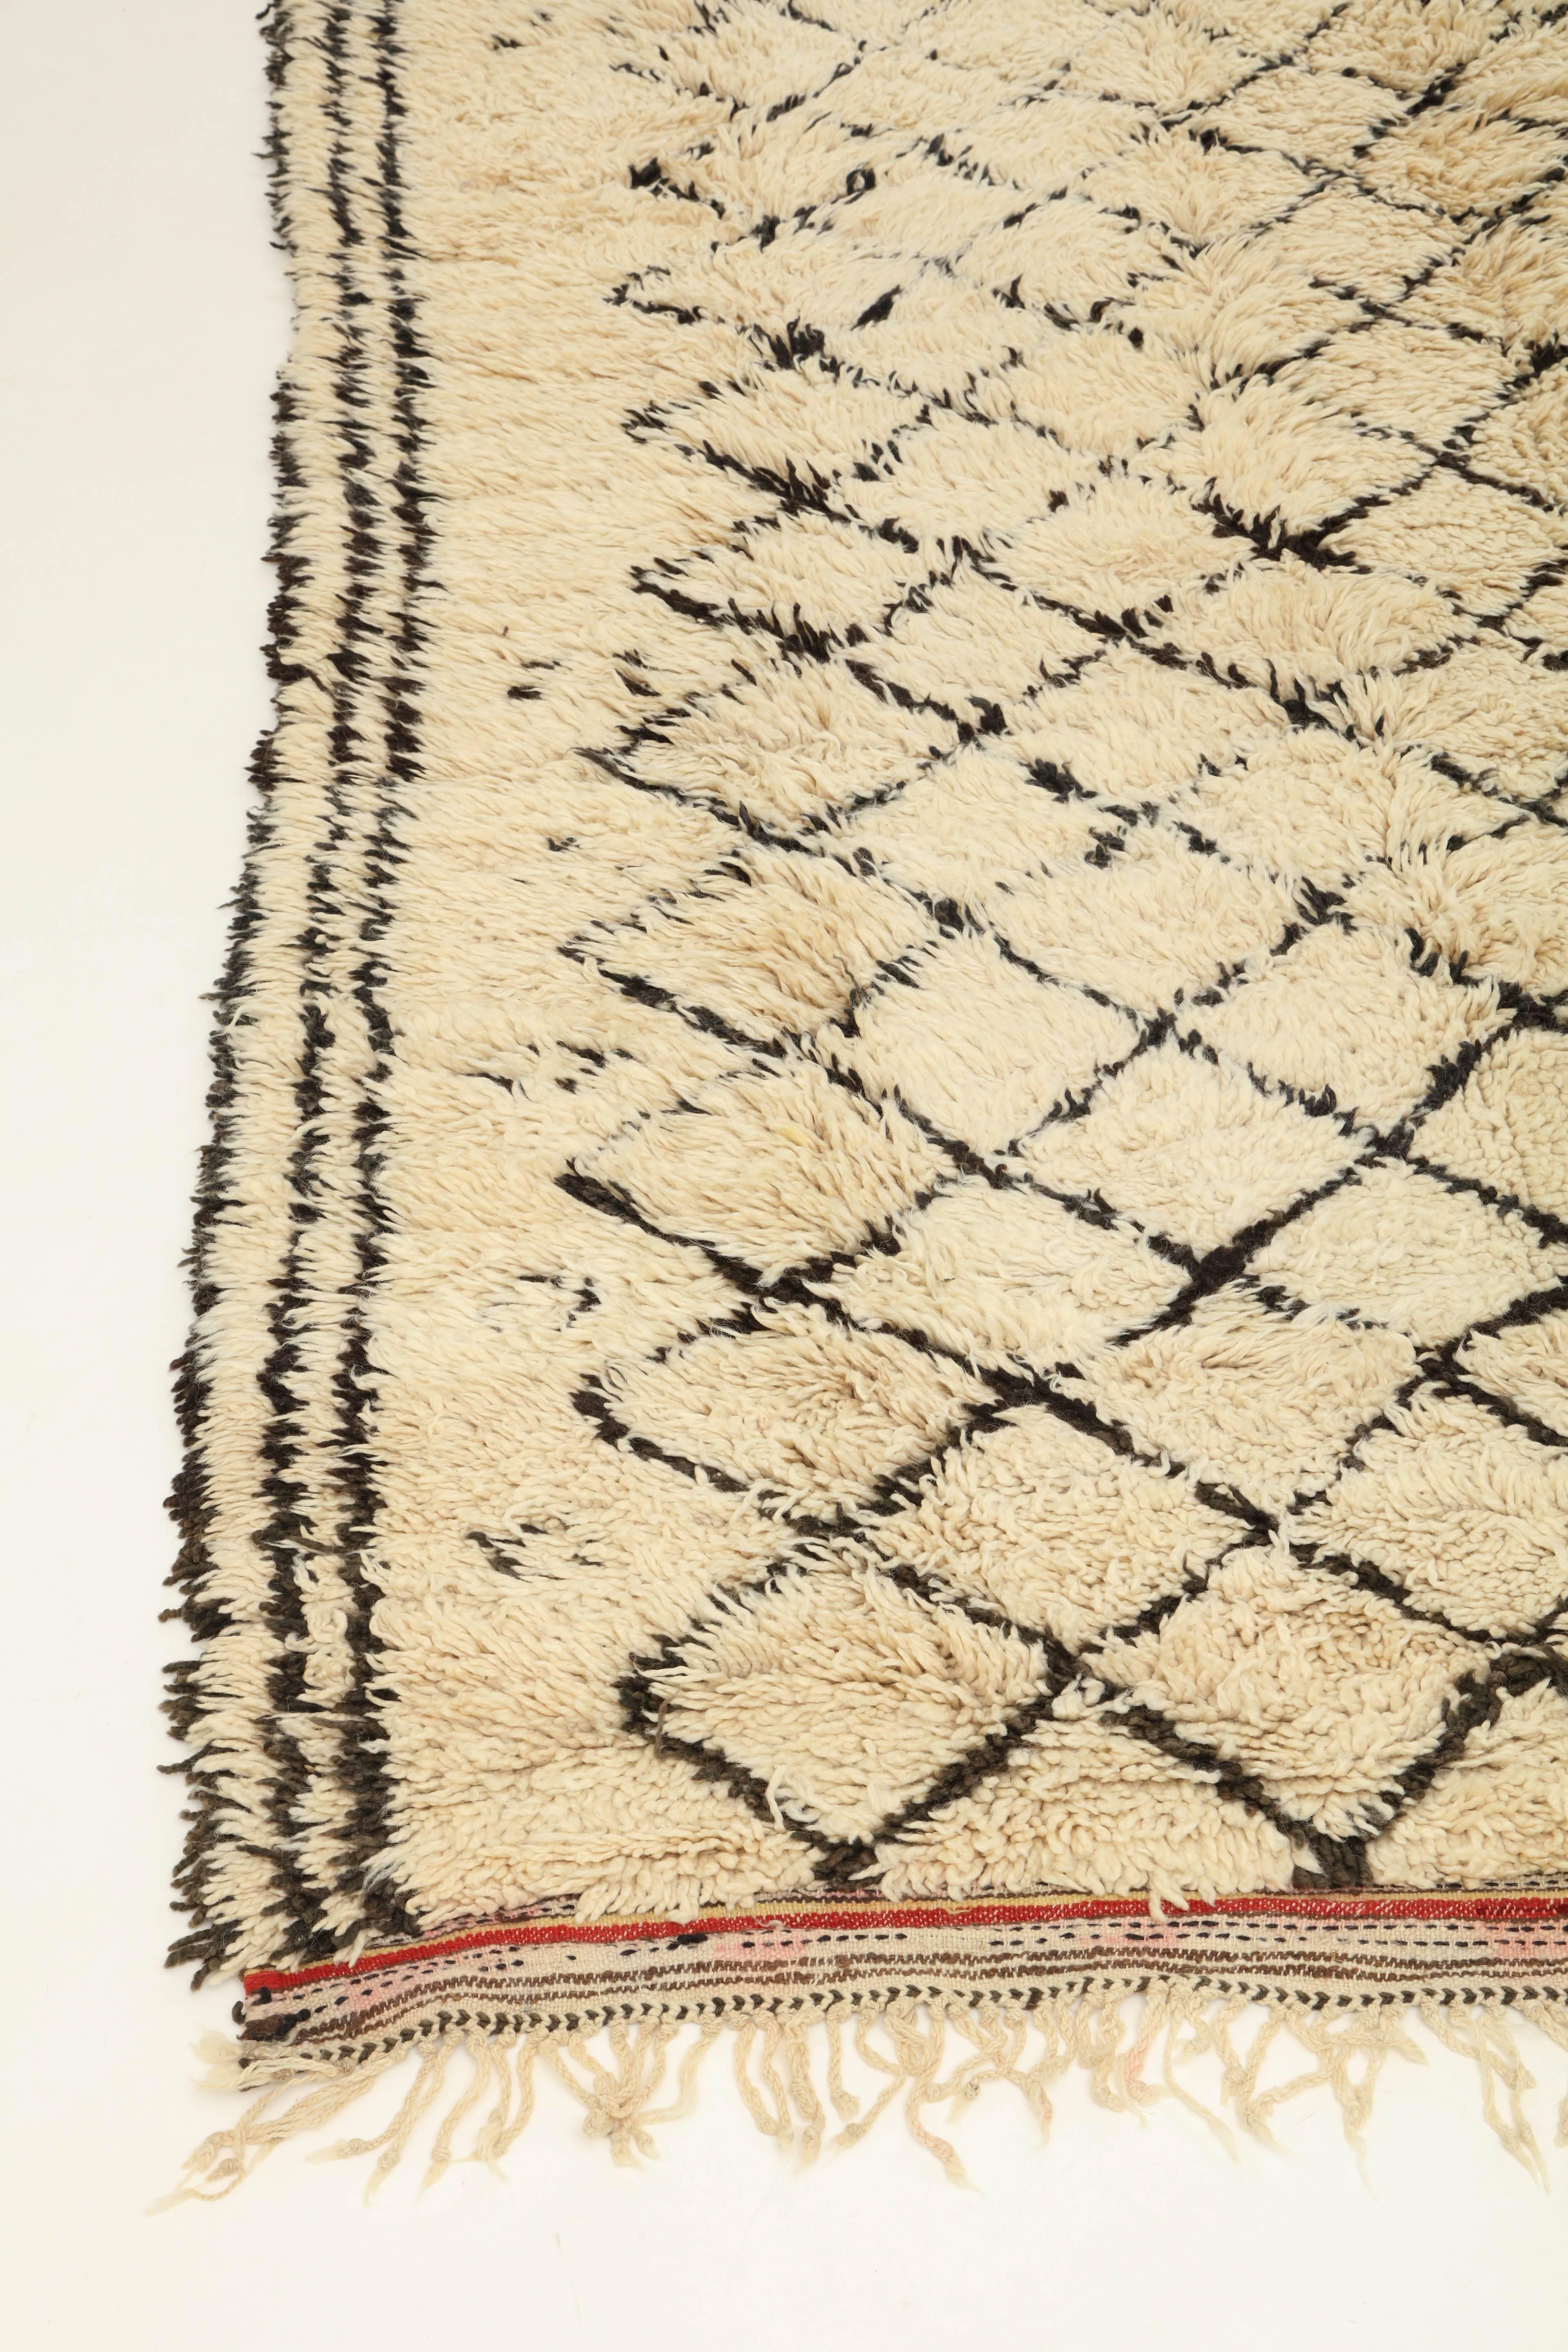 Wool Rug, Vintage Beni Ourain Moroccan Rug, Ivory and Black